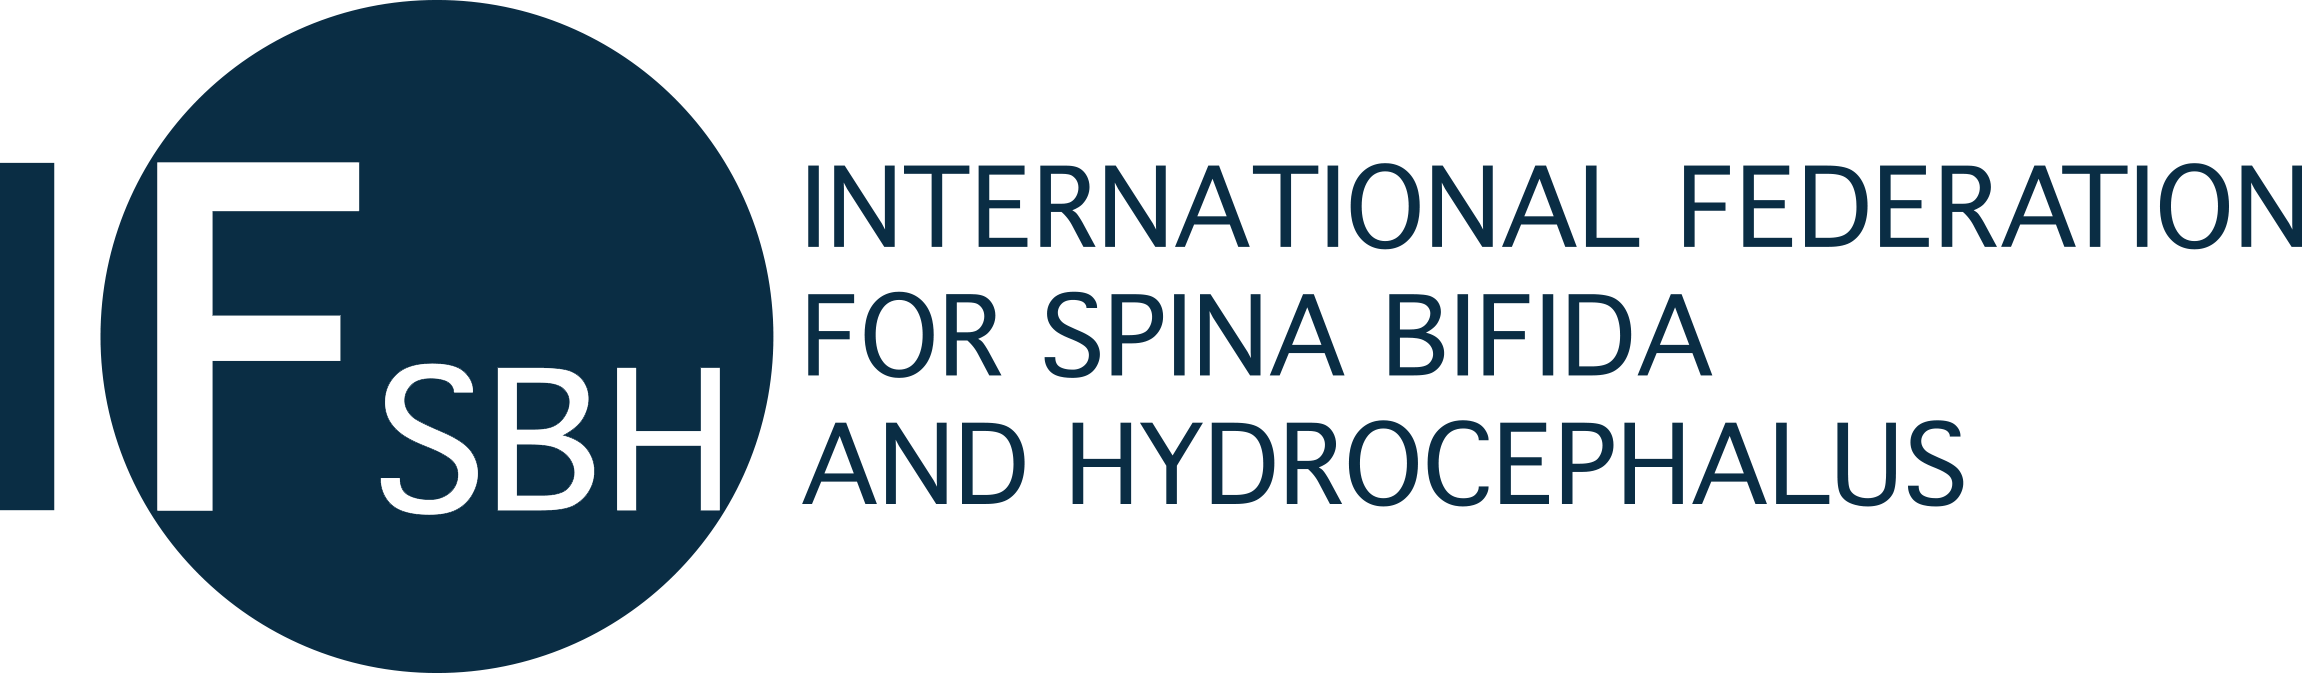 International Federation for Spina bifida and Hydrocephalus